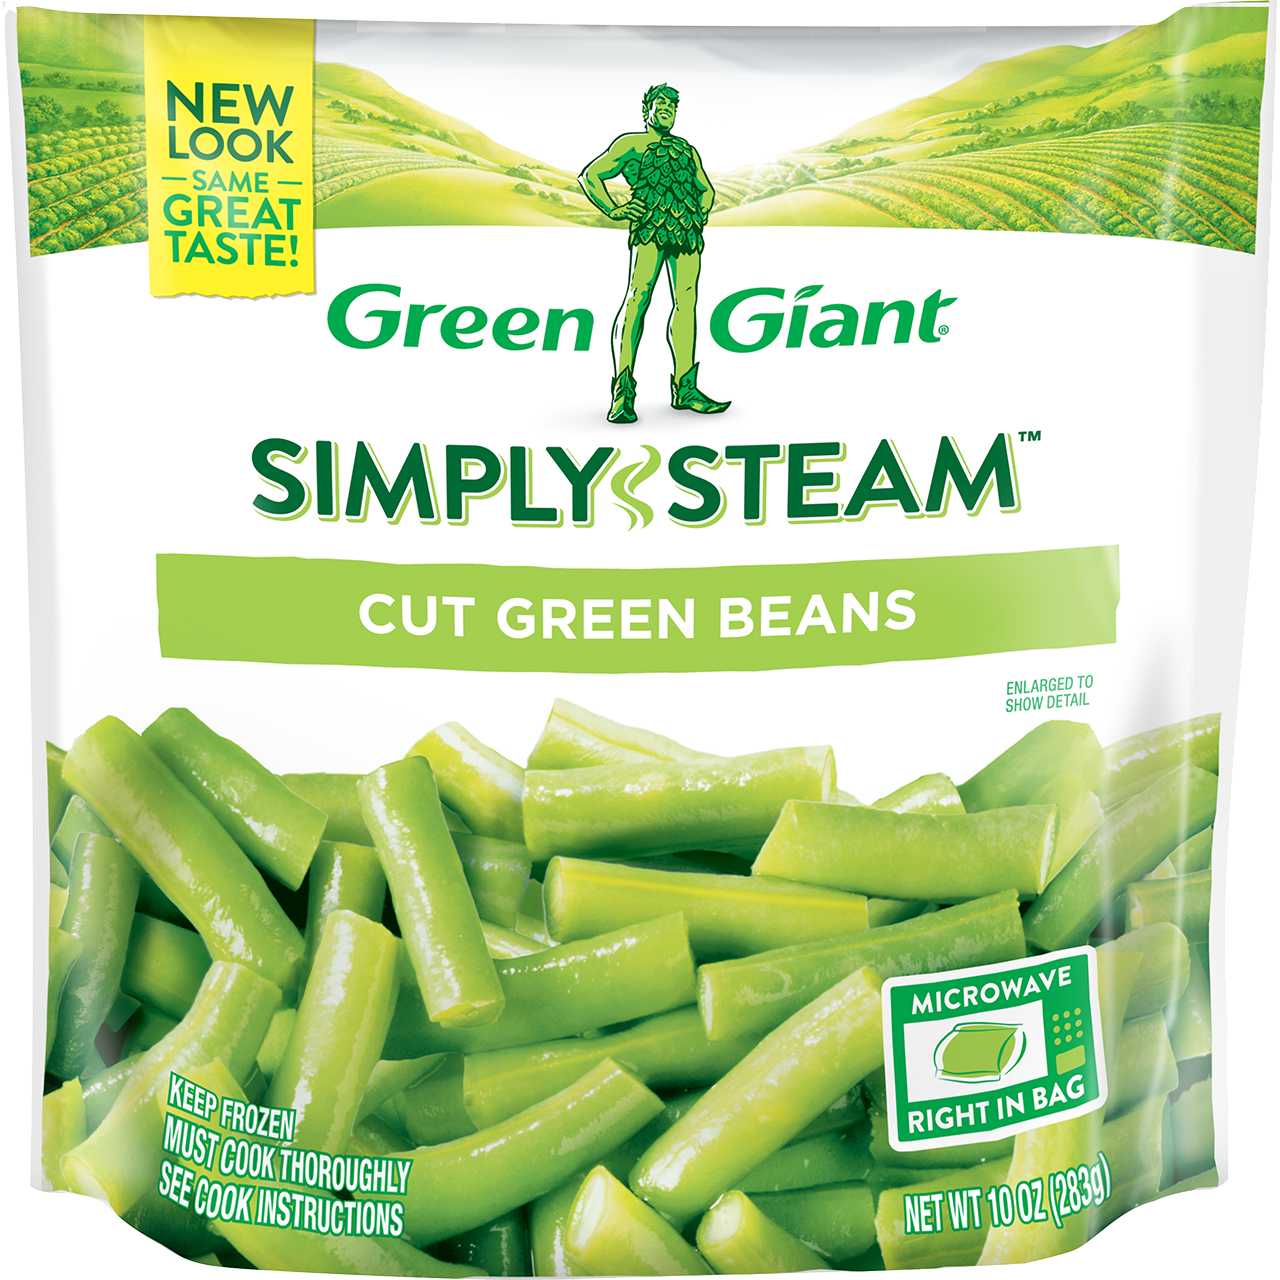 10-Minute Sautéed Frozen Green Beans - Scrummy Lane